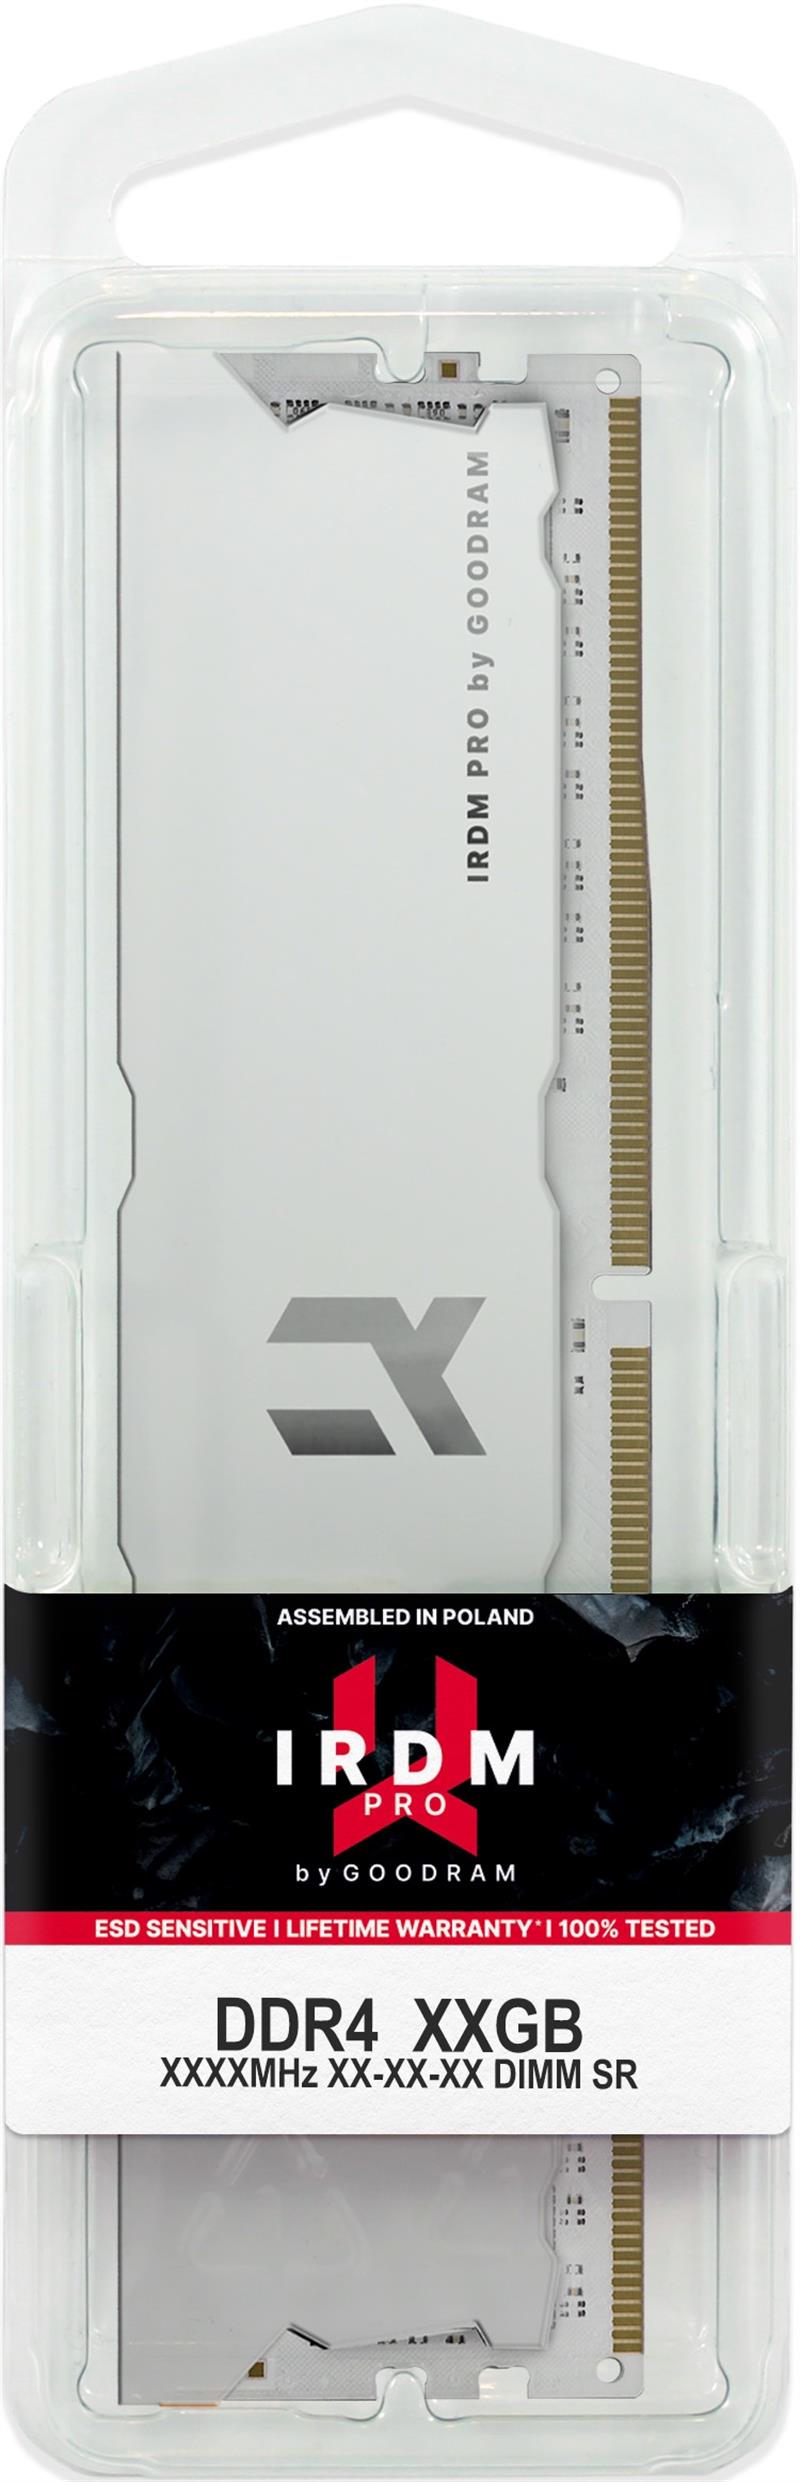 GOODRAM 2x8GB IRDM PRO DDR4 HOLLOW WHITE Dual Channel kit 3600MHz CL17 SR DIMM - HOLLOW WHITE -